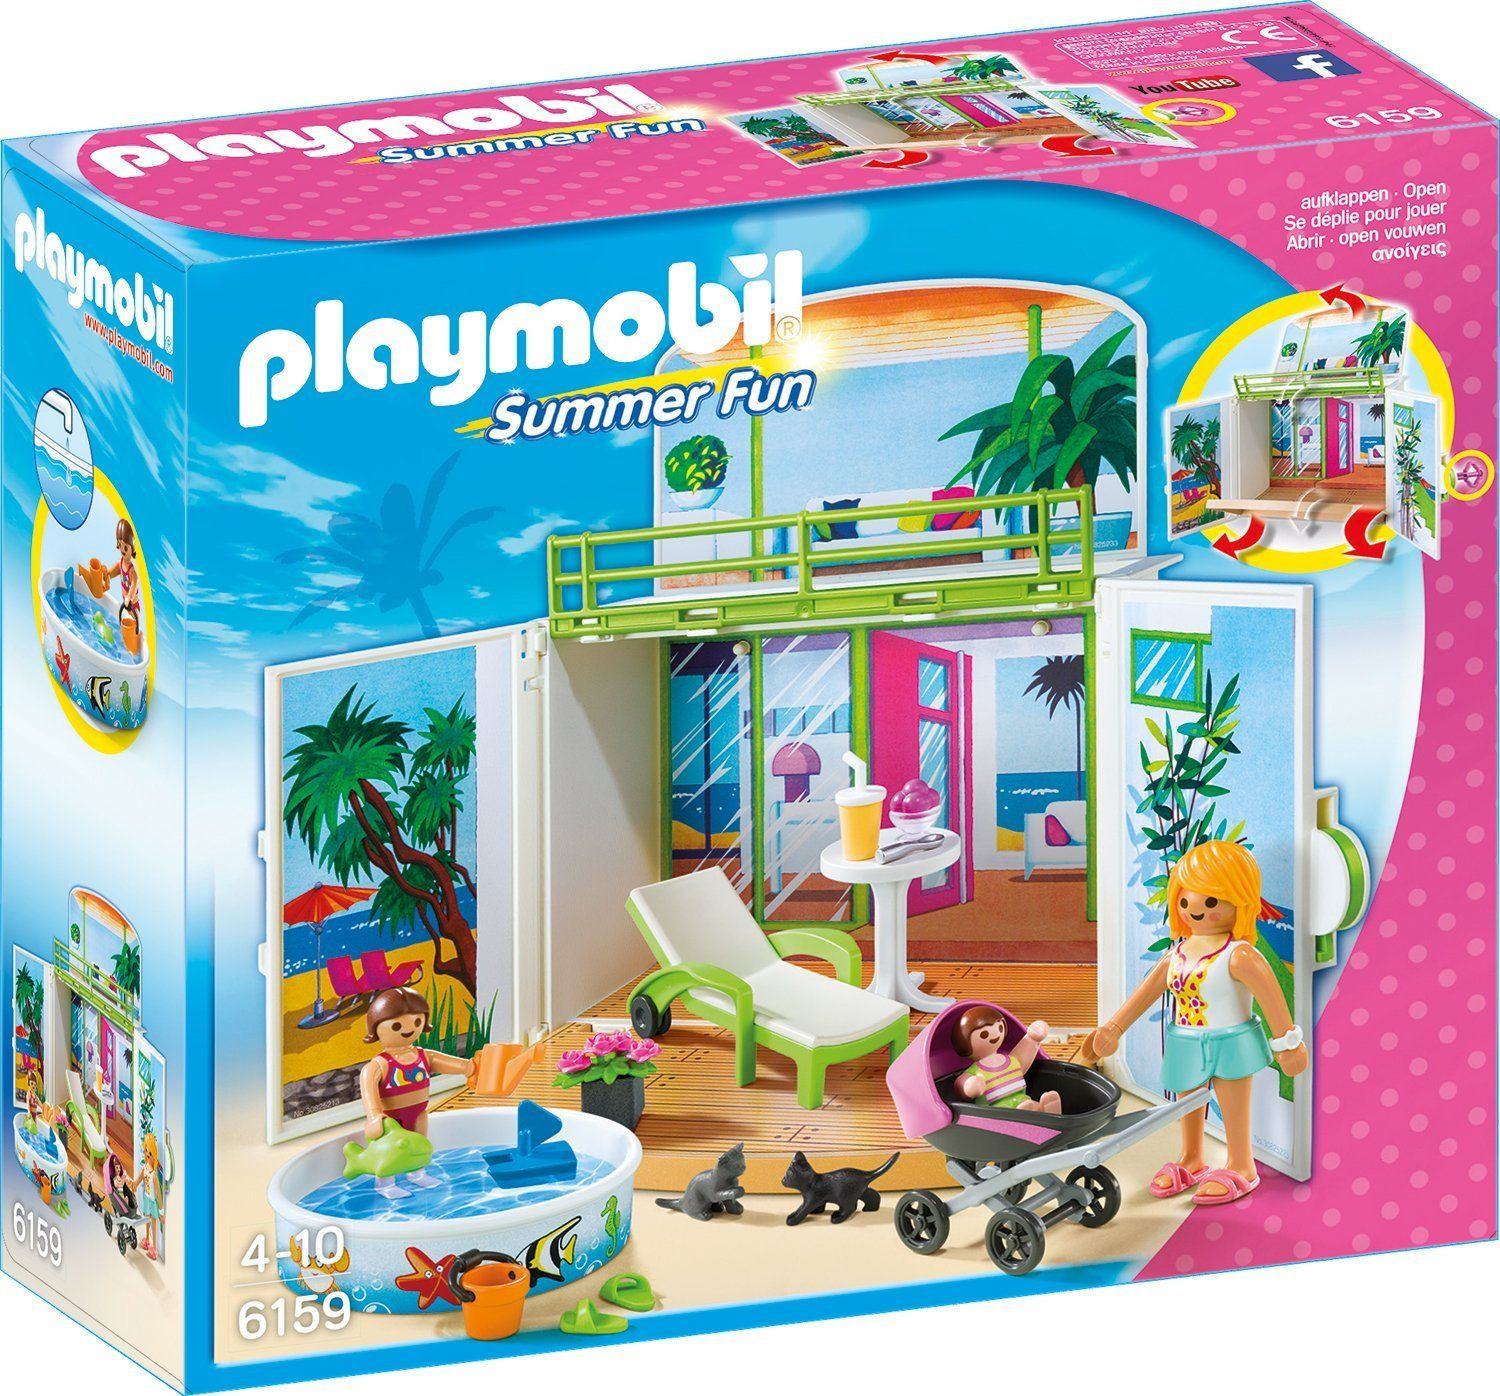 Playmobil Haus Amazon
 Playmobil Summer Fun Beach House Play Box 6159